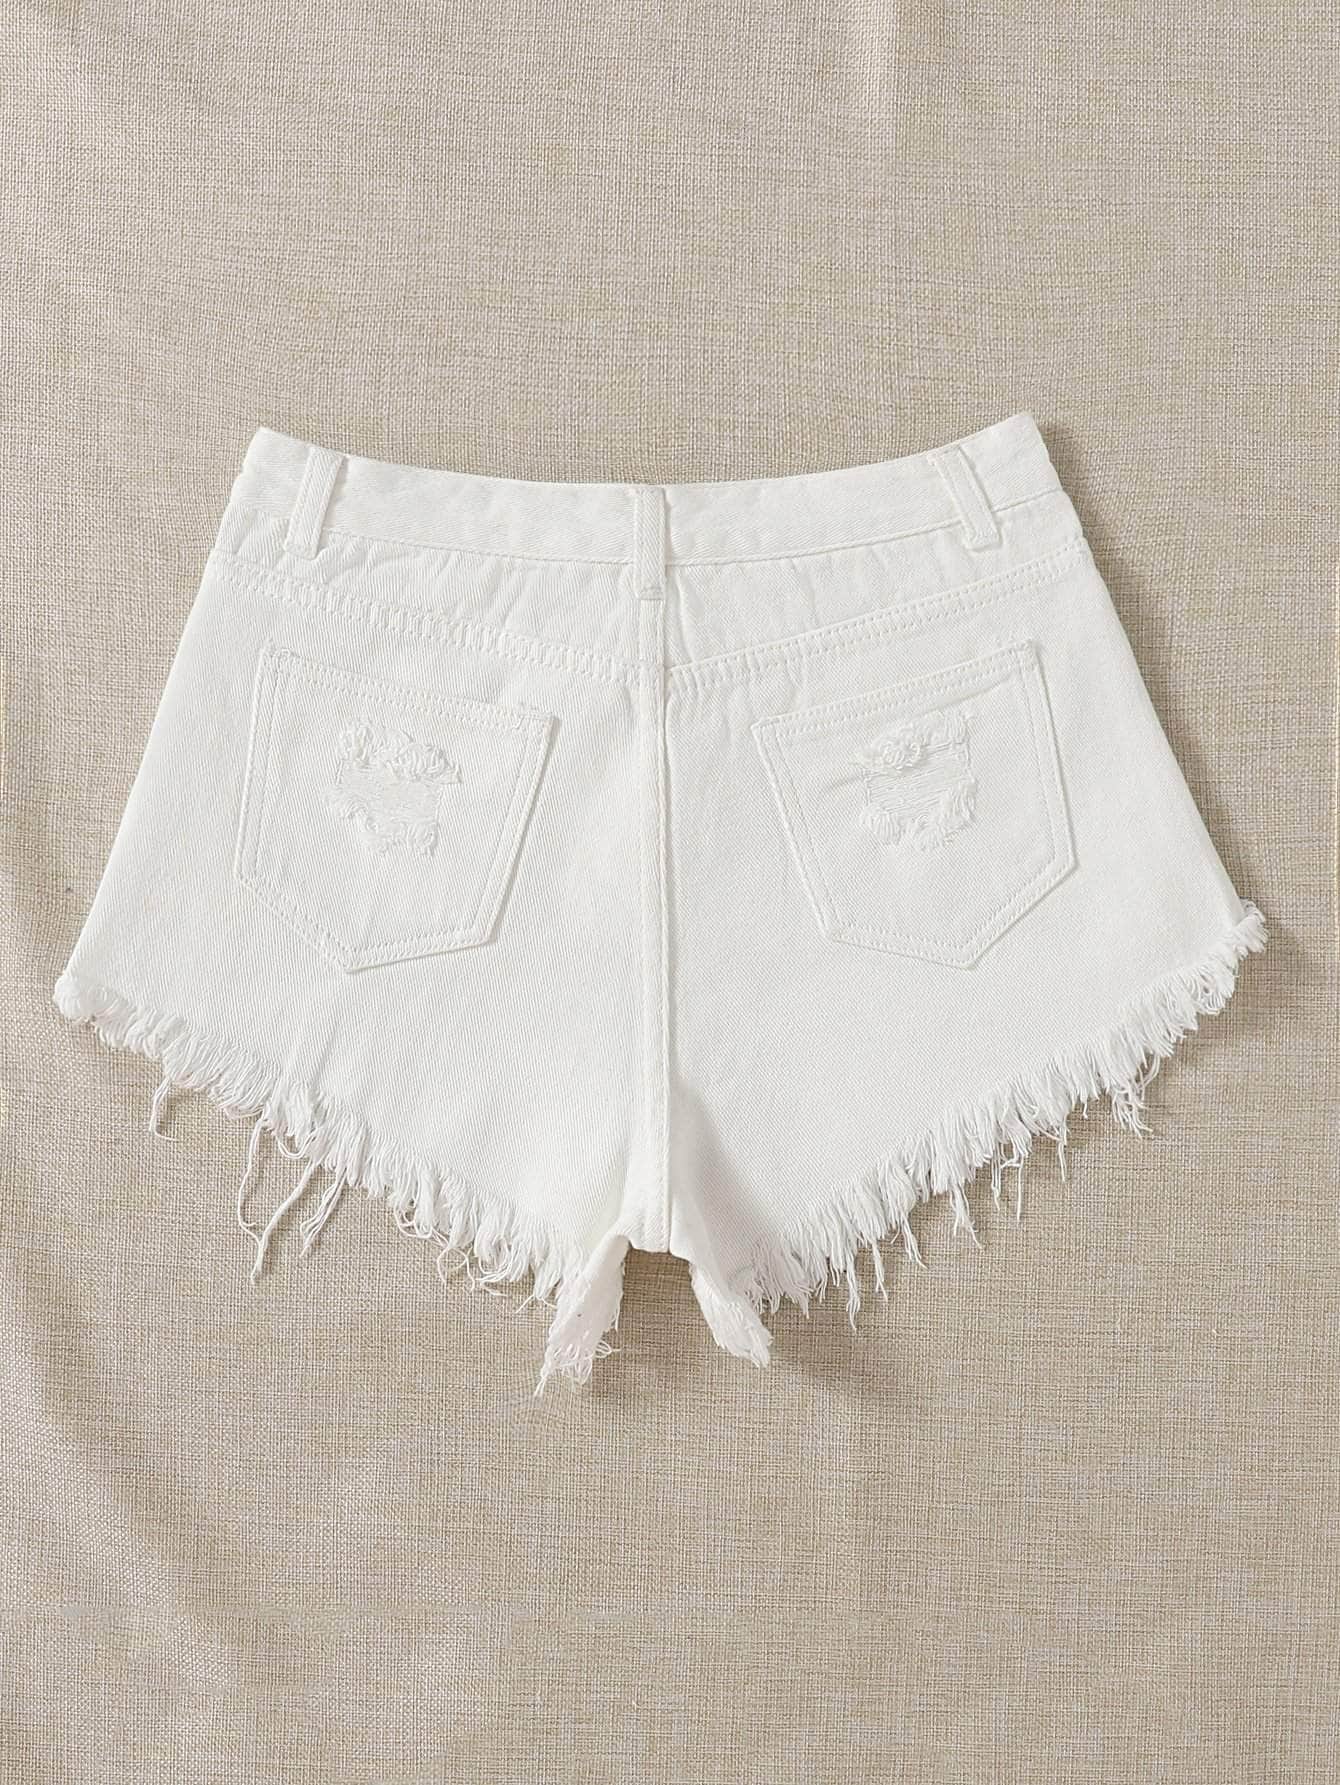 Blanco / M Shorts jean rotos bajo crudo